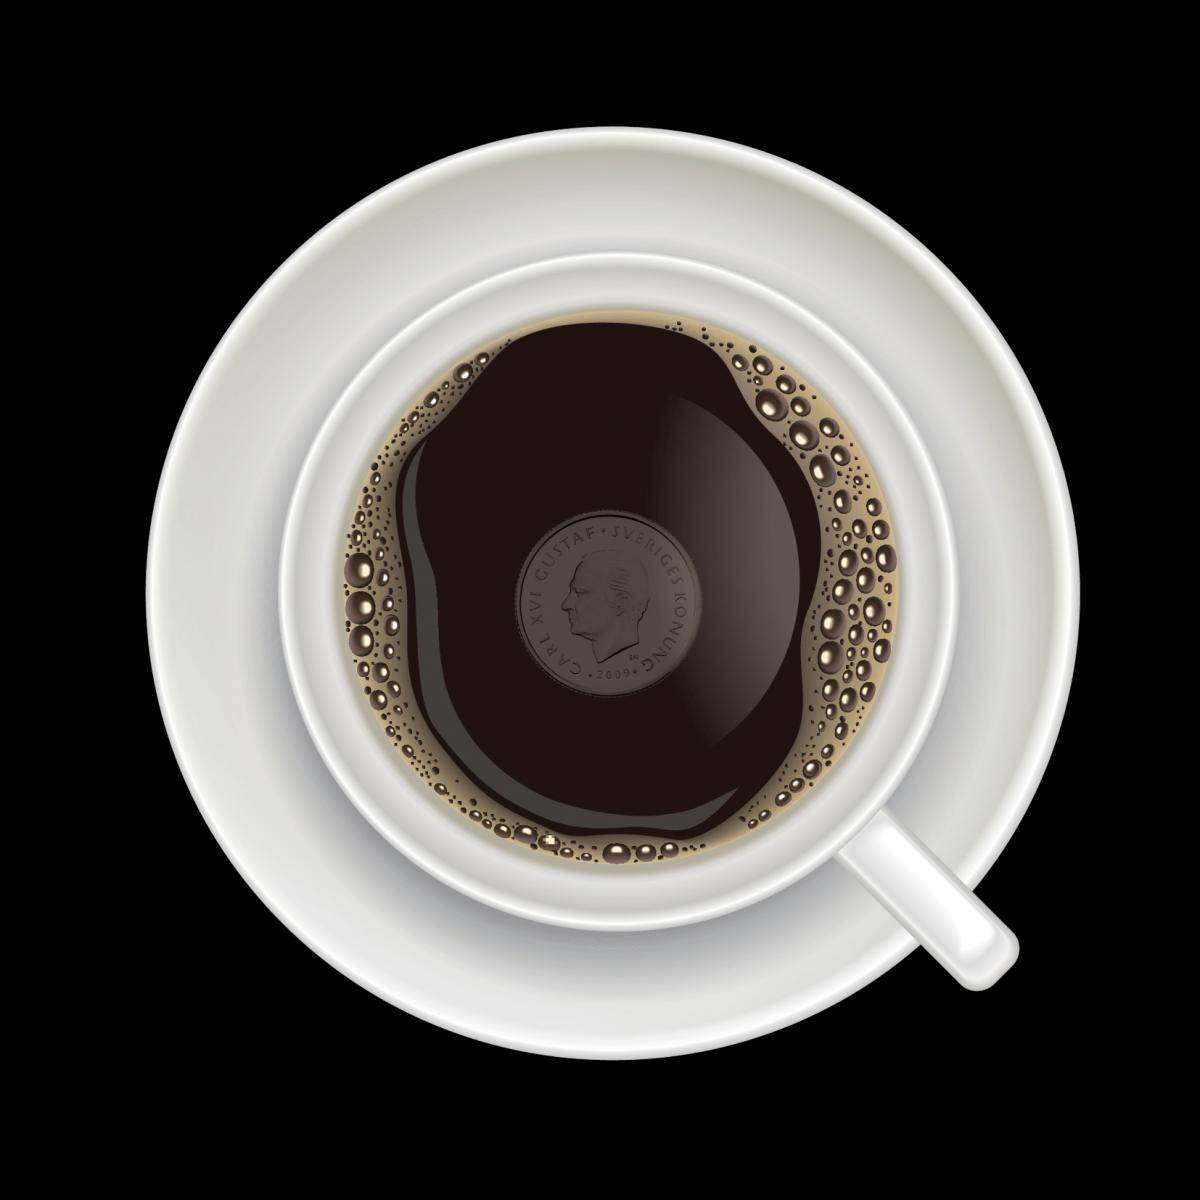 Kaffekask, gök, uddevallare – Il caffé corretto “alla svedese”problem-ingenjorer/